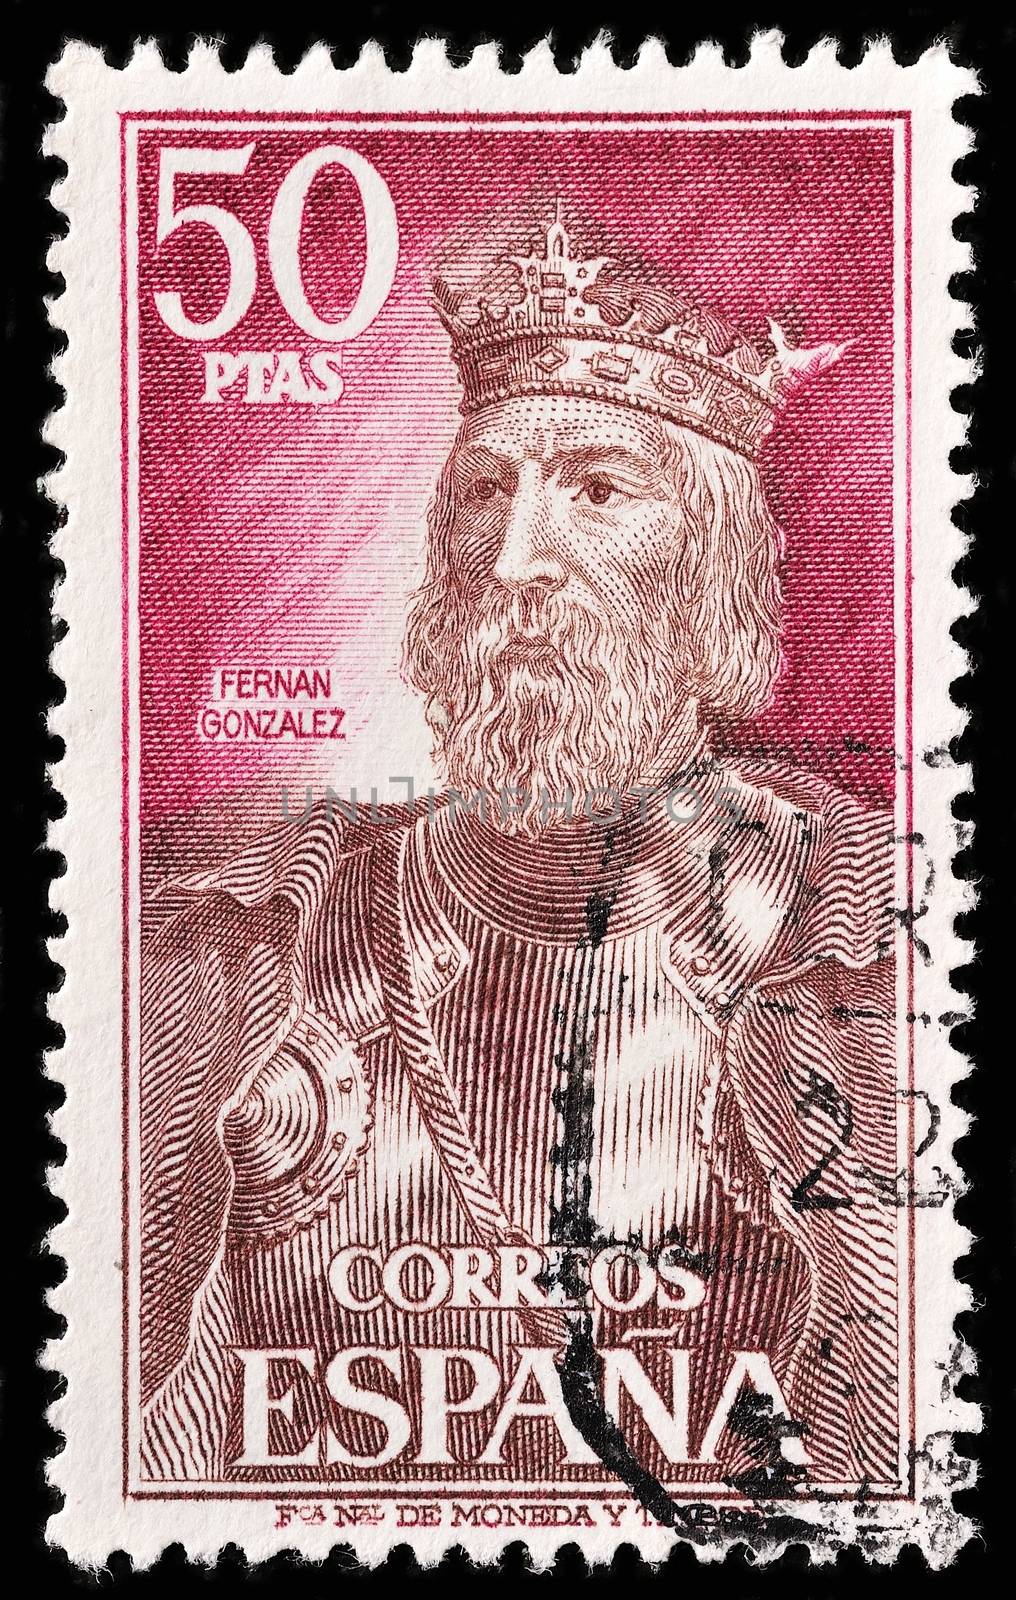 SPAIN - CIRCA 1972: A stamp printed in Spain shows Fernan Gonzalez of Castile, circa 1972